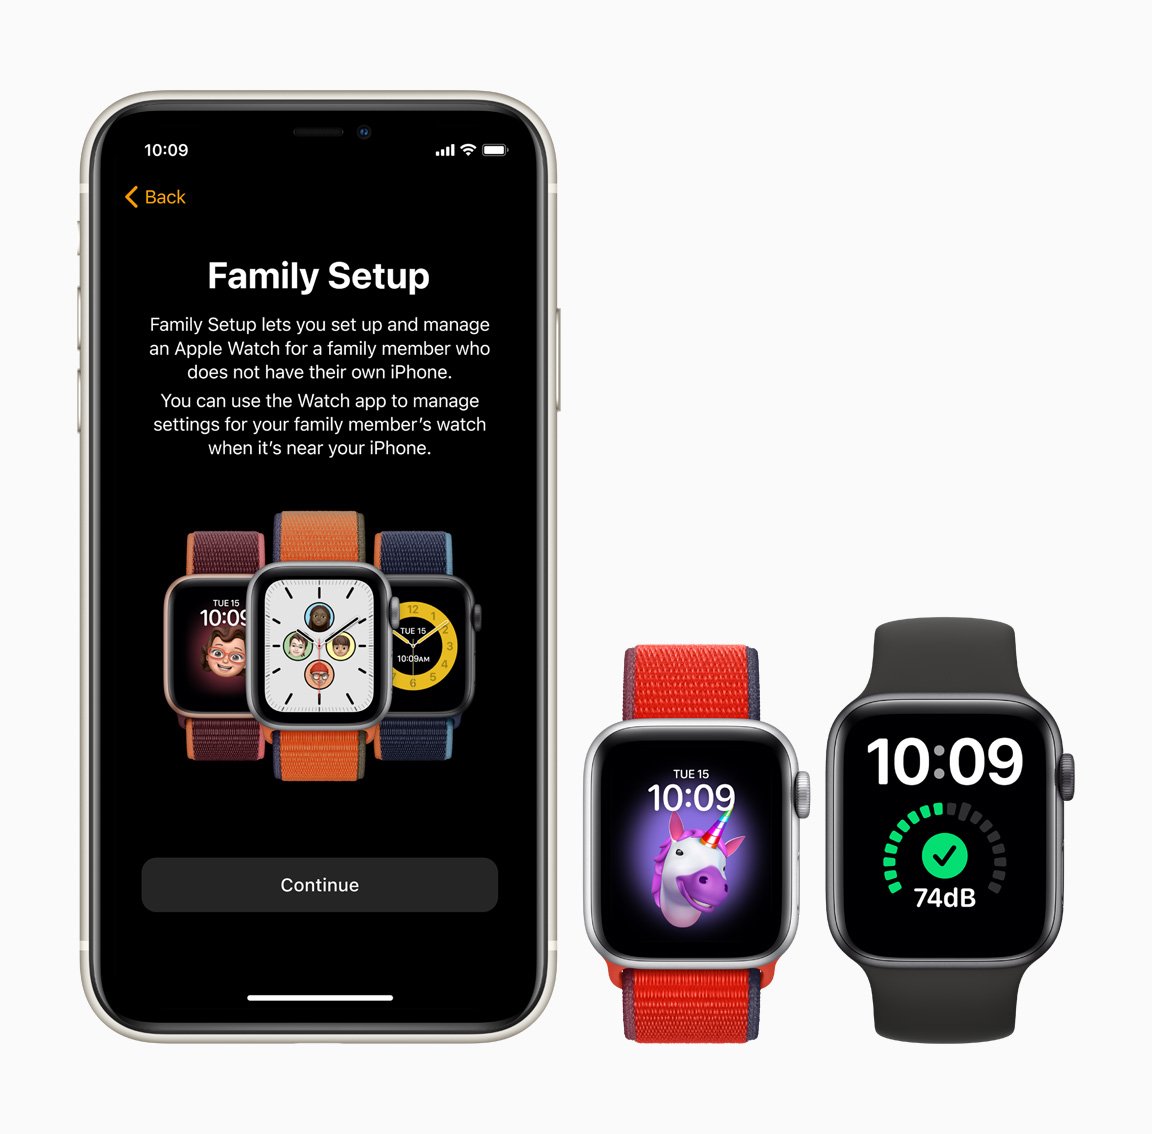 Apple_watch-family-setup-iphone11-screen_09152020_inline.jpg.medium_2x.jpg